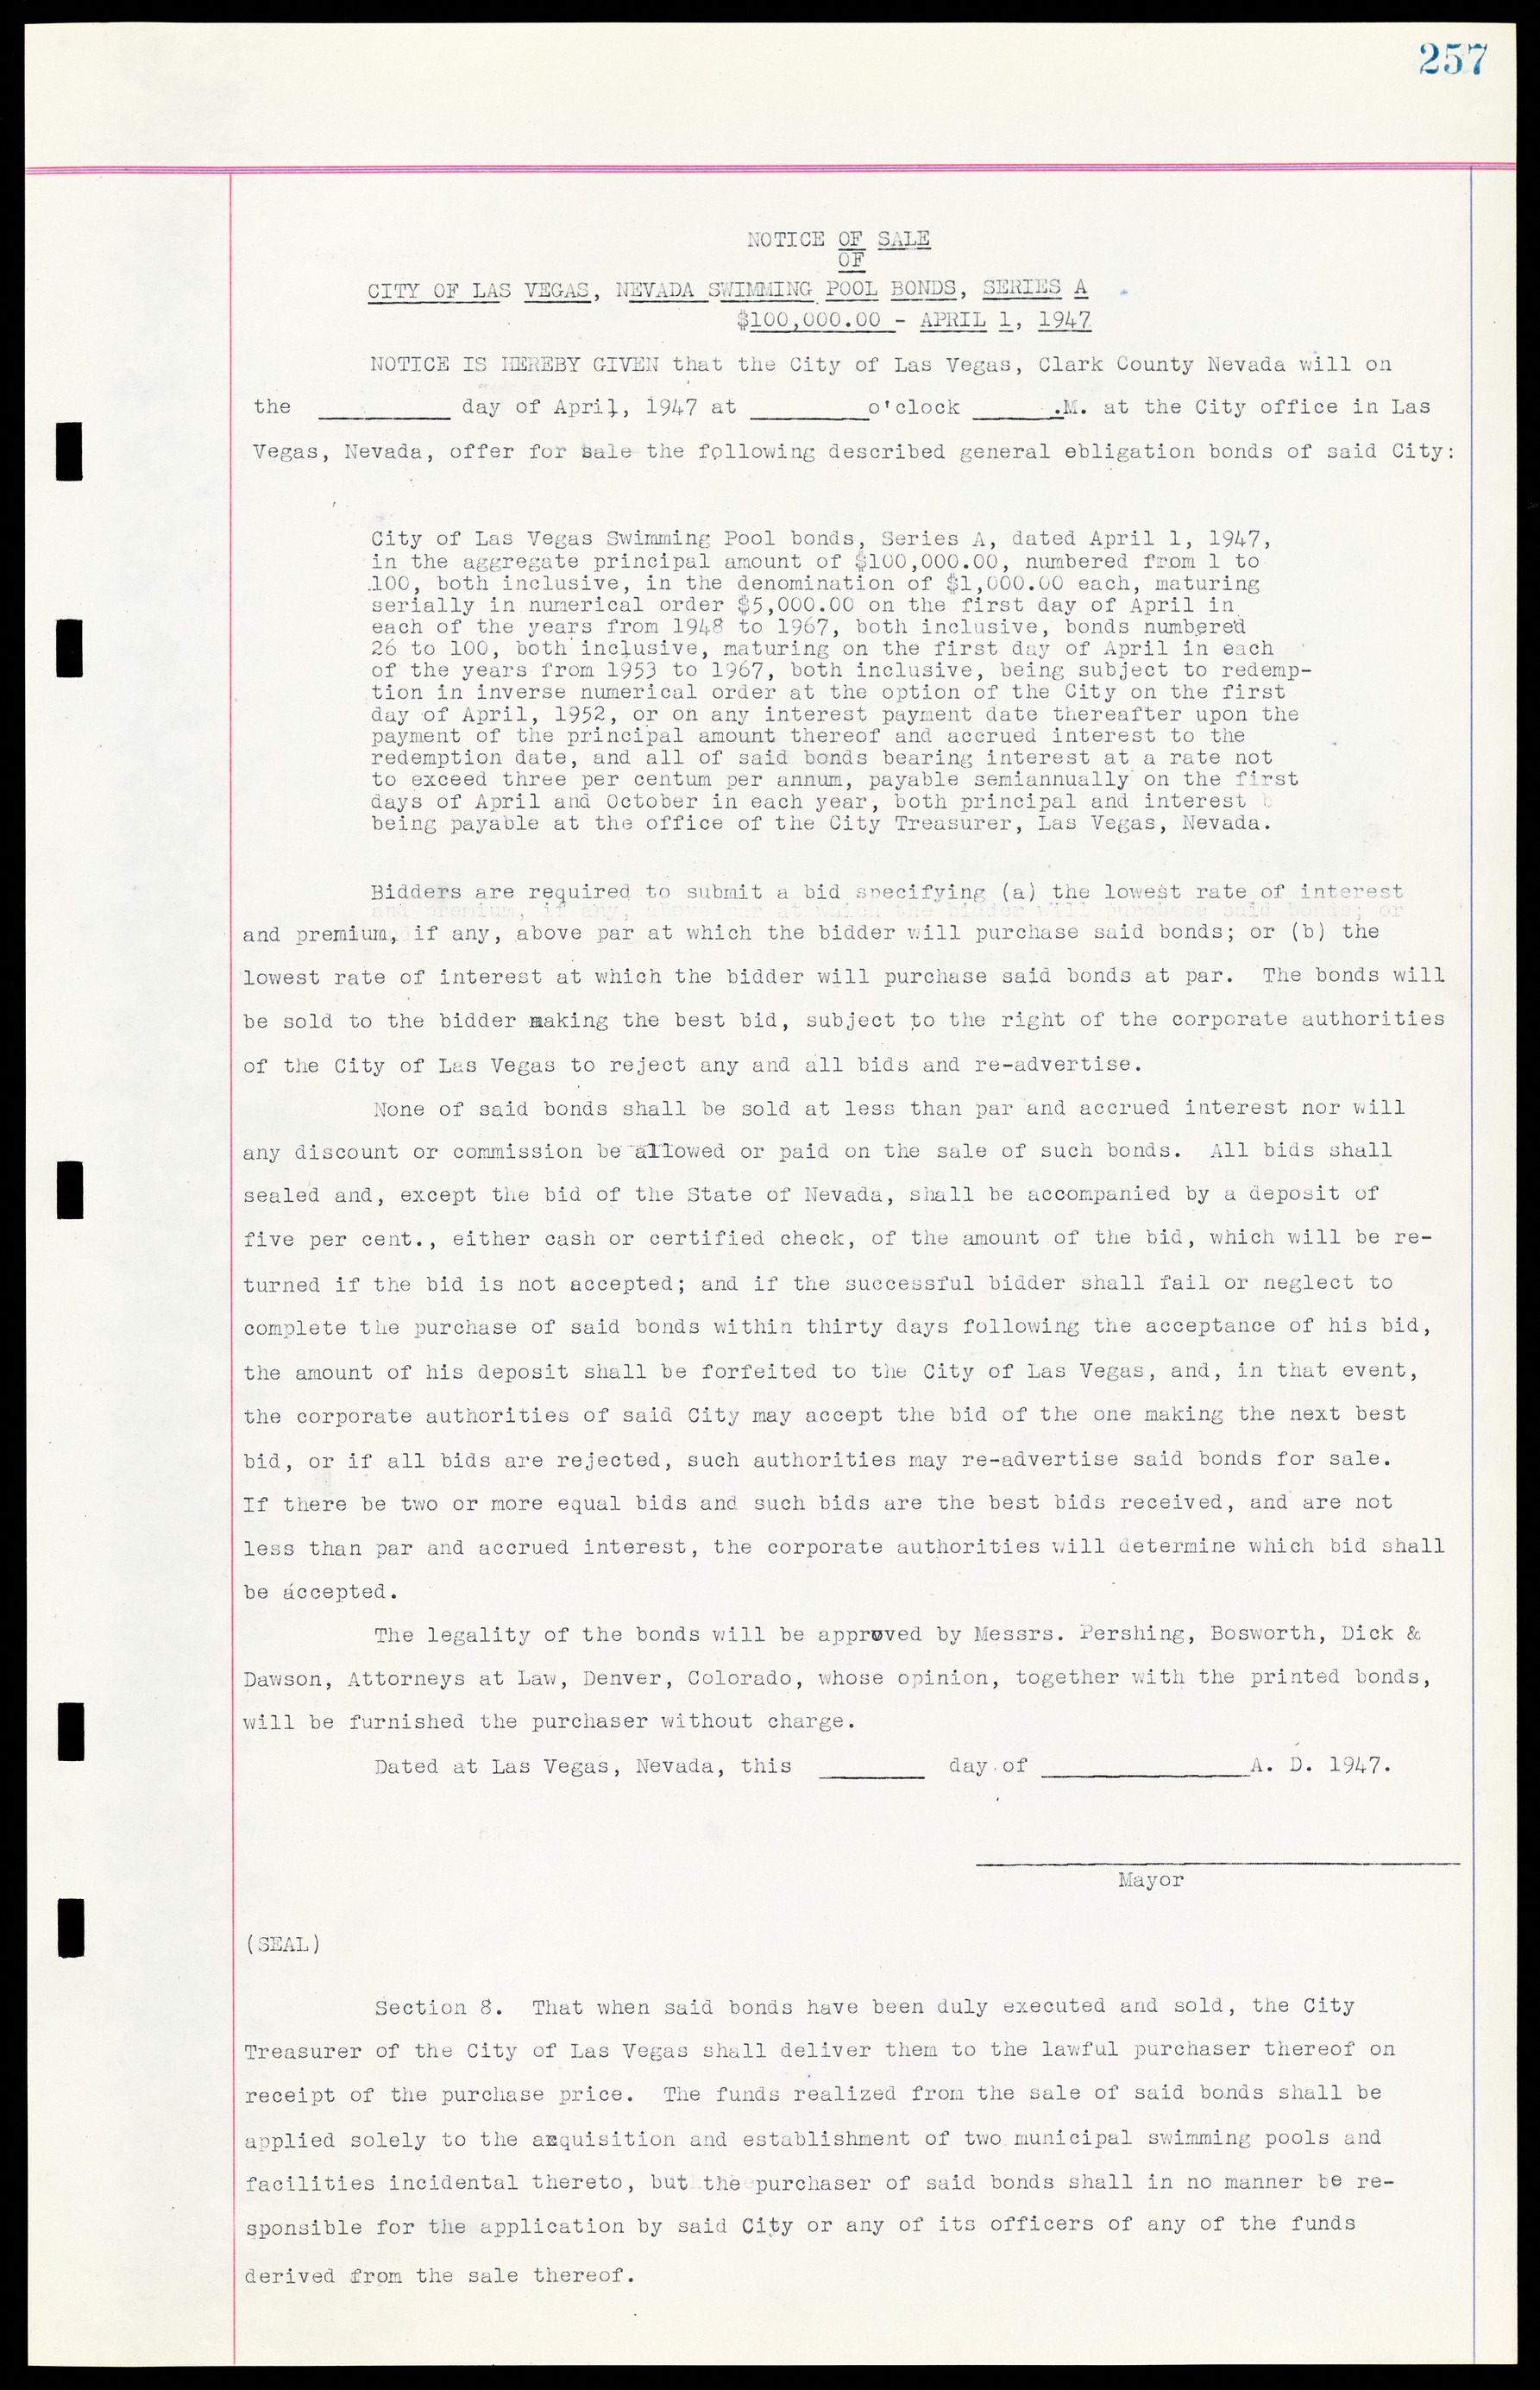 Las Vegas City Ordinances, March 31, 1933 to October 25, 1950, lvc000014-286